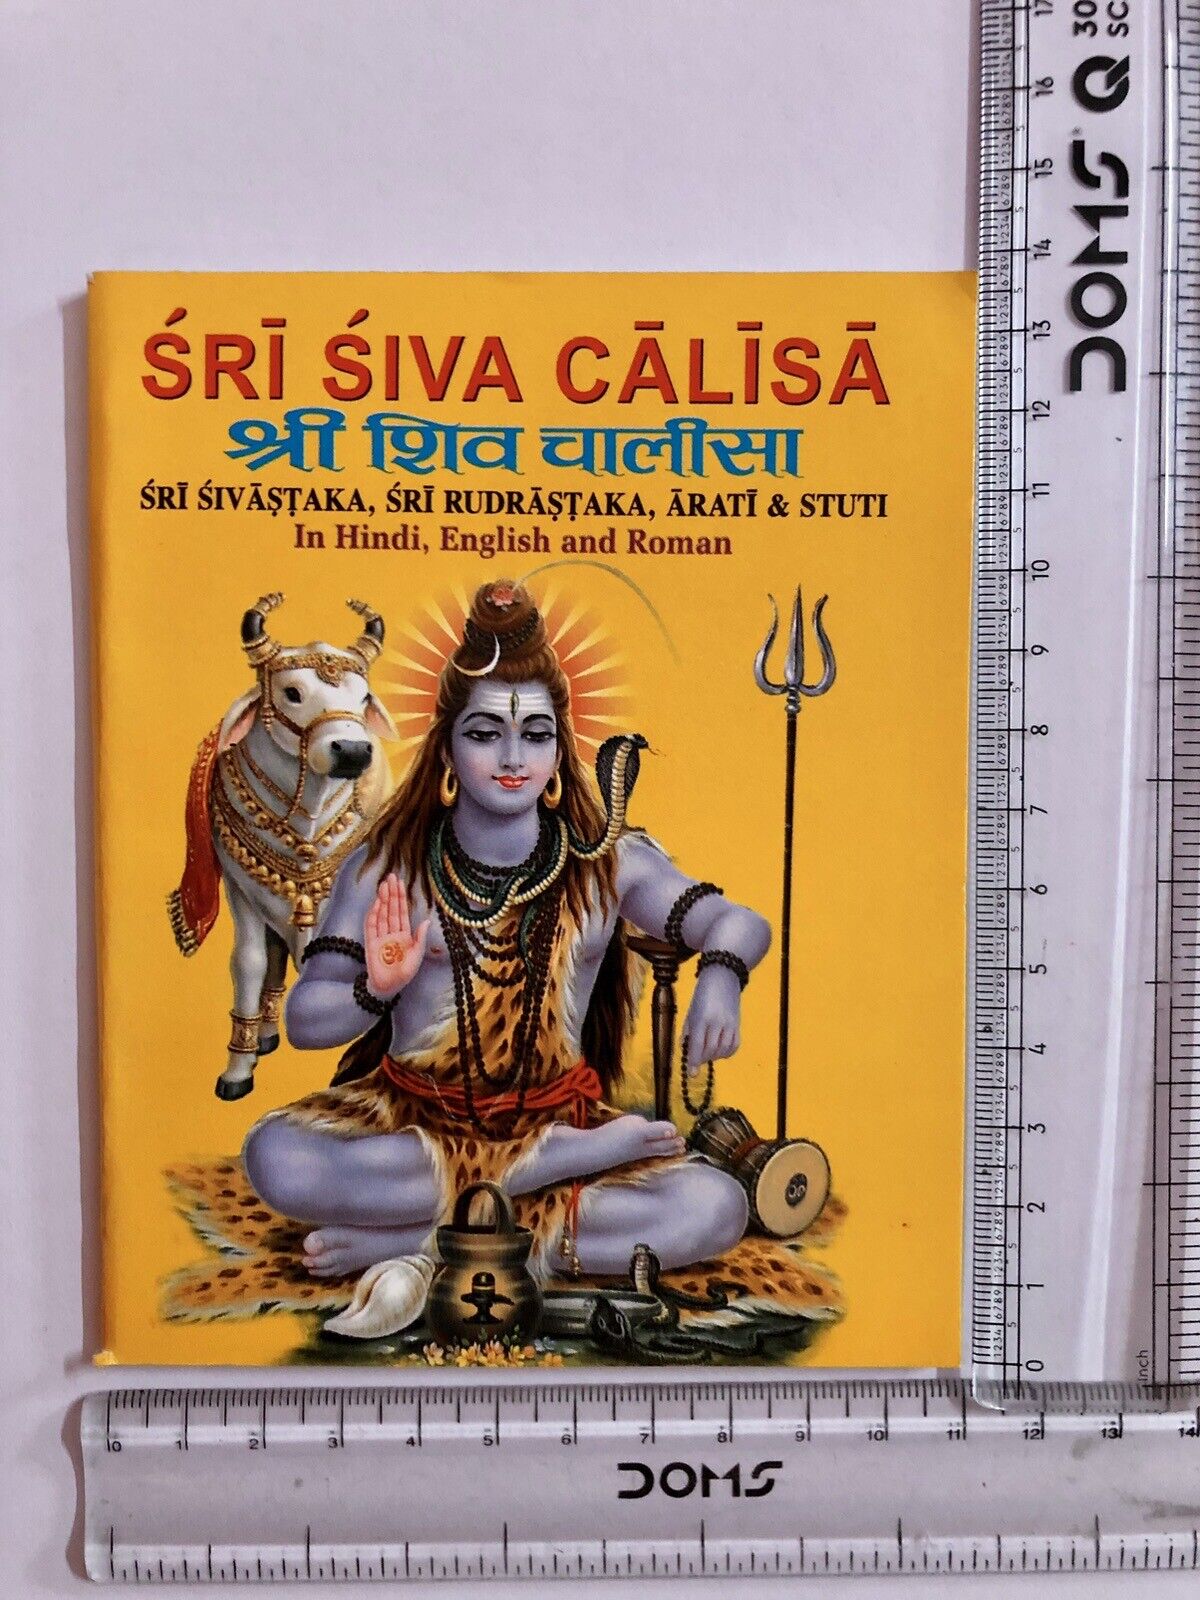 1 Pc Shri Shiv Chalisa- Hindi, English & Roman, Hindu Religious Book, Colorful